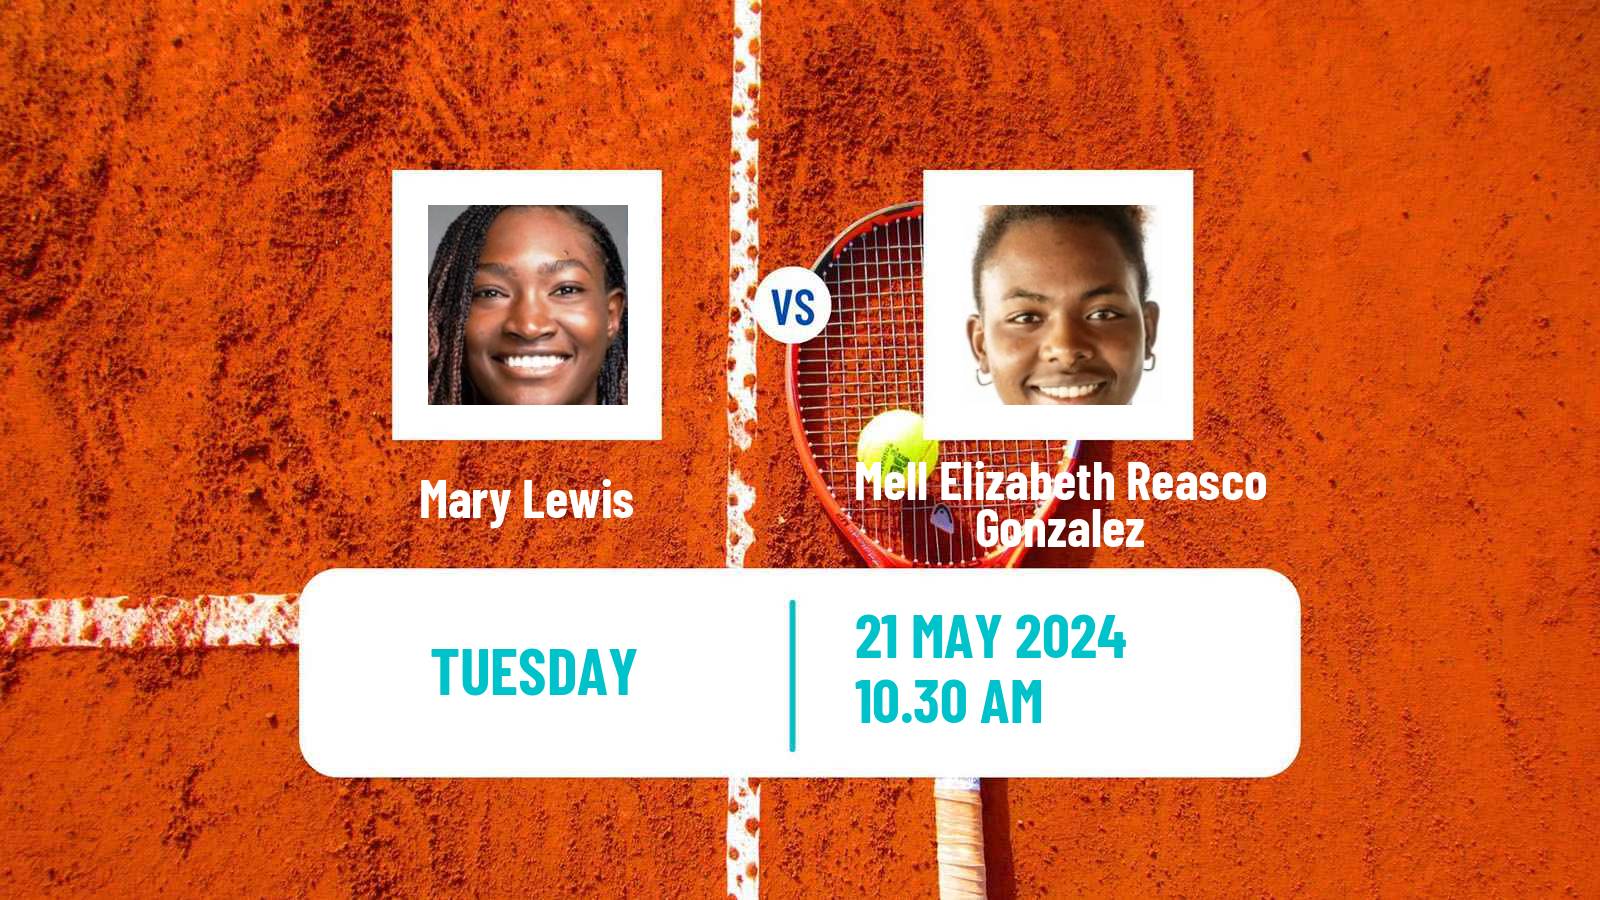 Tennis ITF W35 Santo Domingo 3 Women Mary Lewis - Mell Elizabeth Reasco Gonzalez